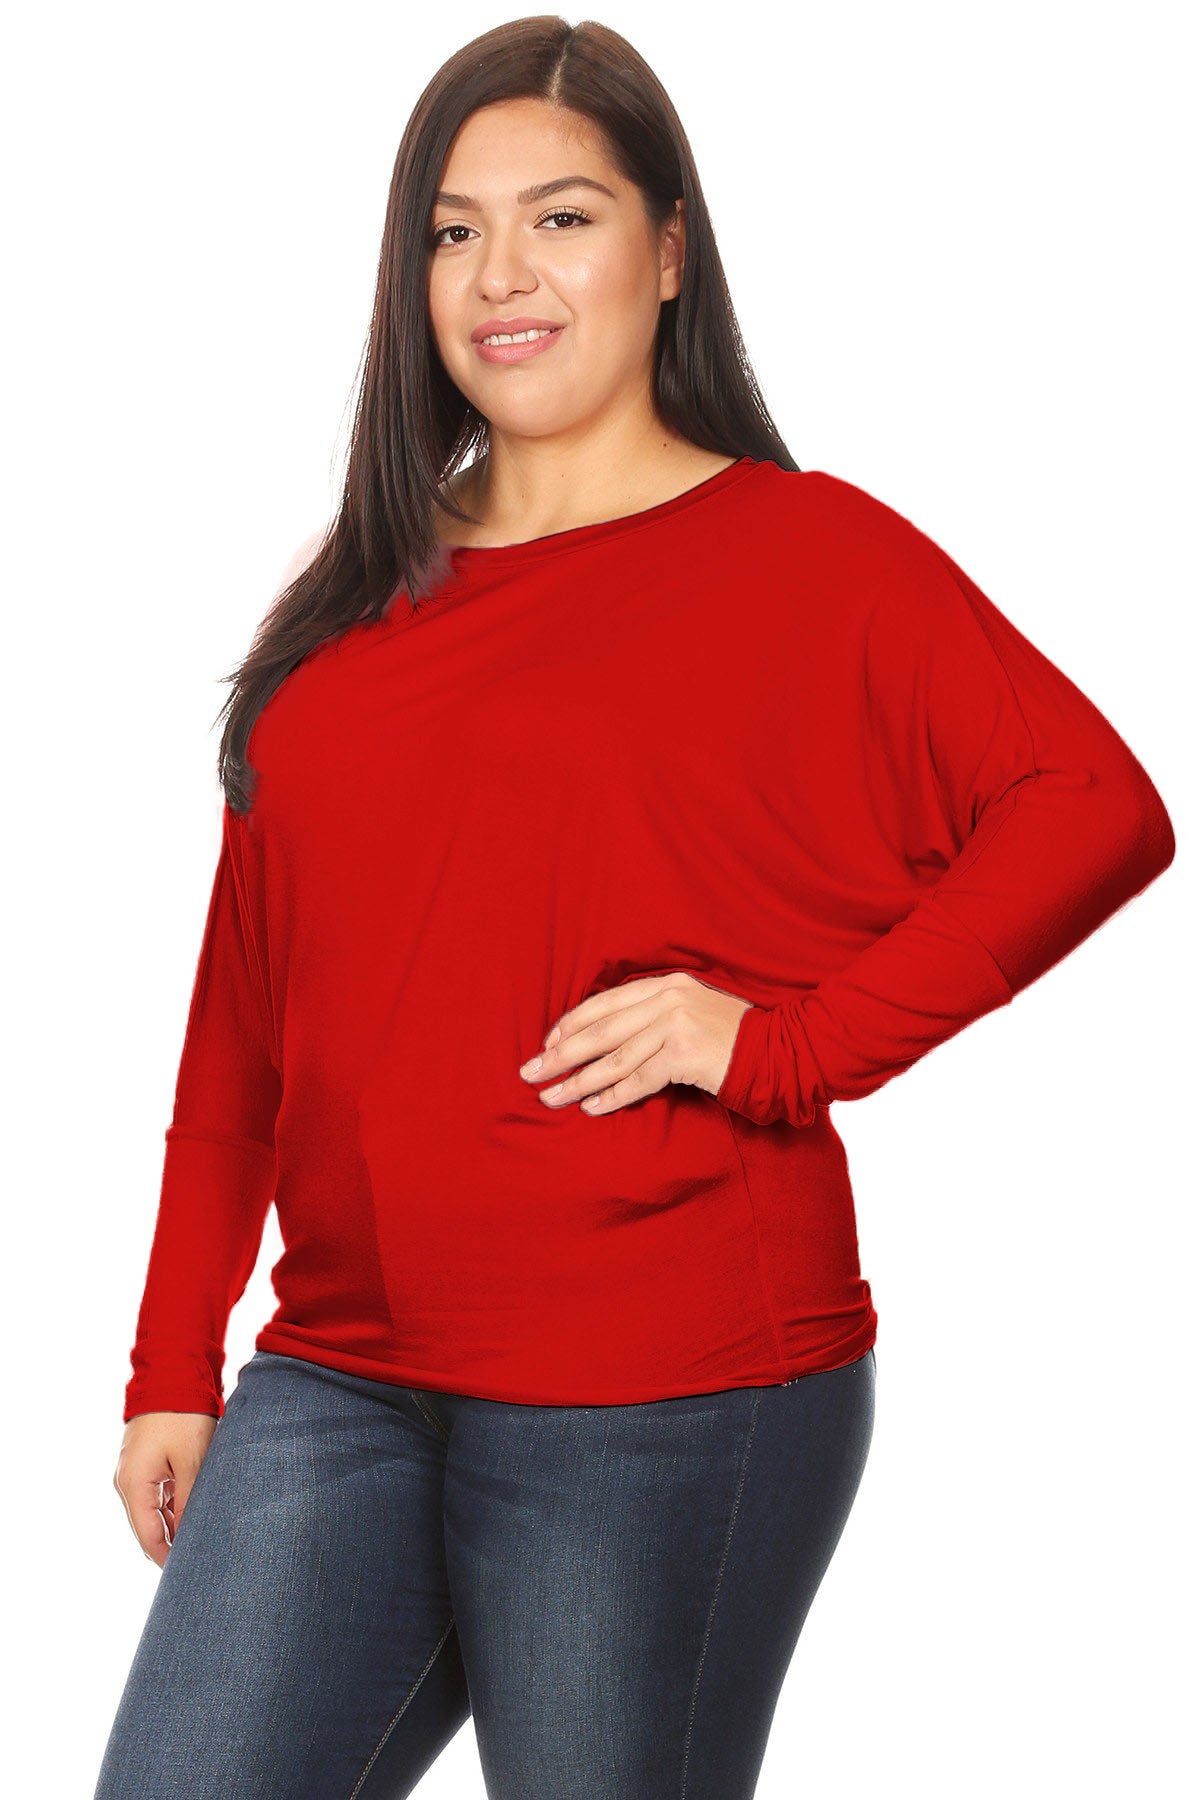 Hi Curvy Plus Size Women Dolman Long Sleeve Shirts Made in USA